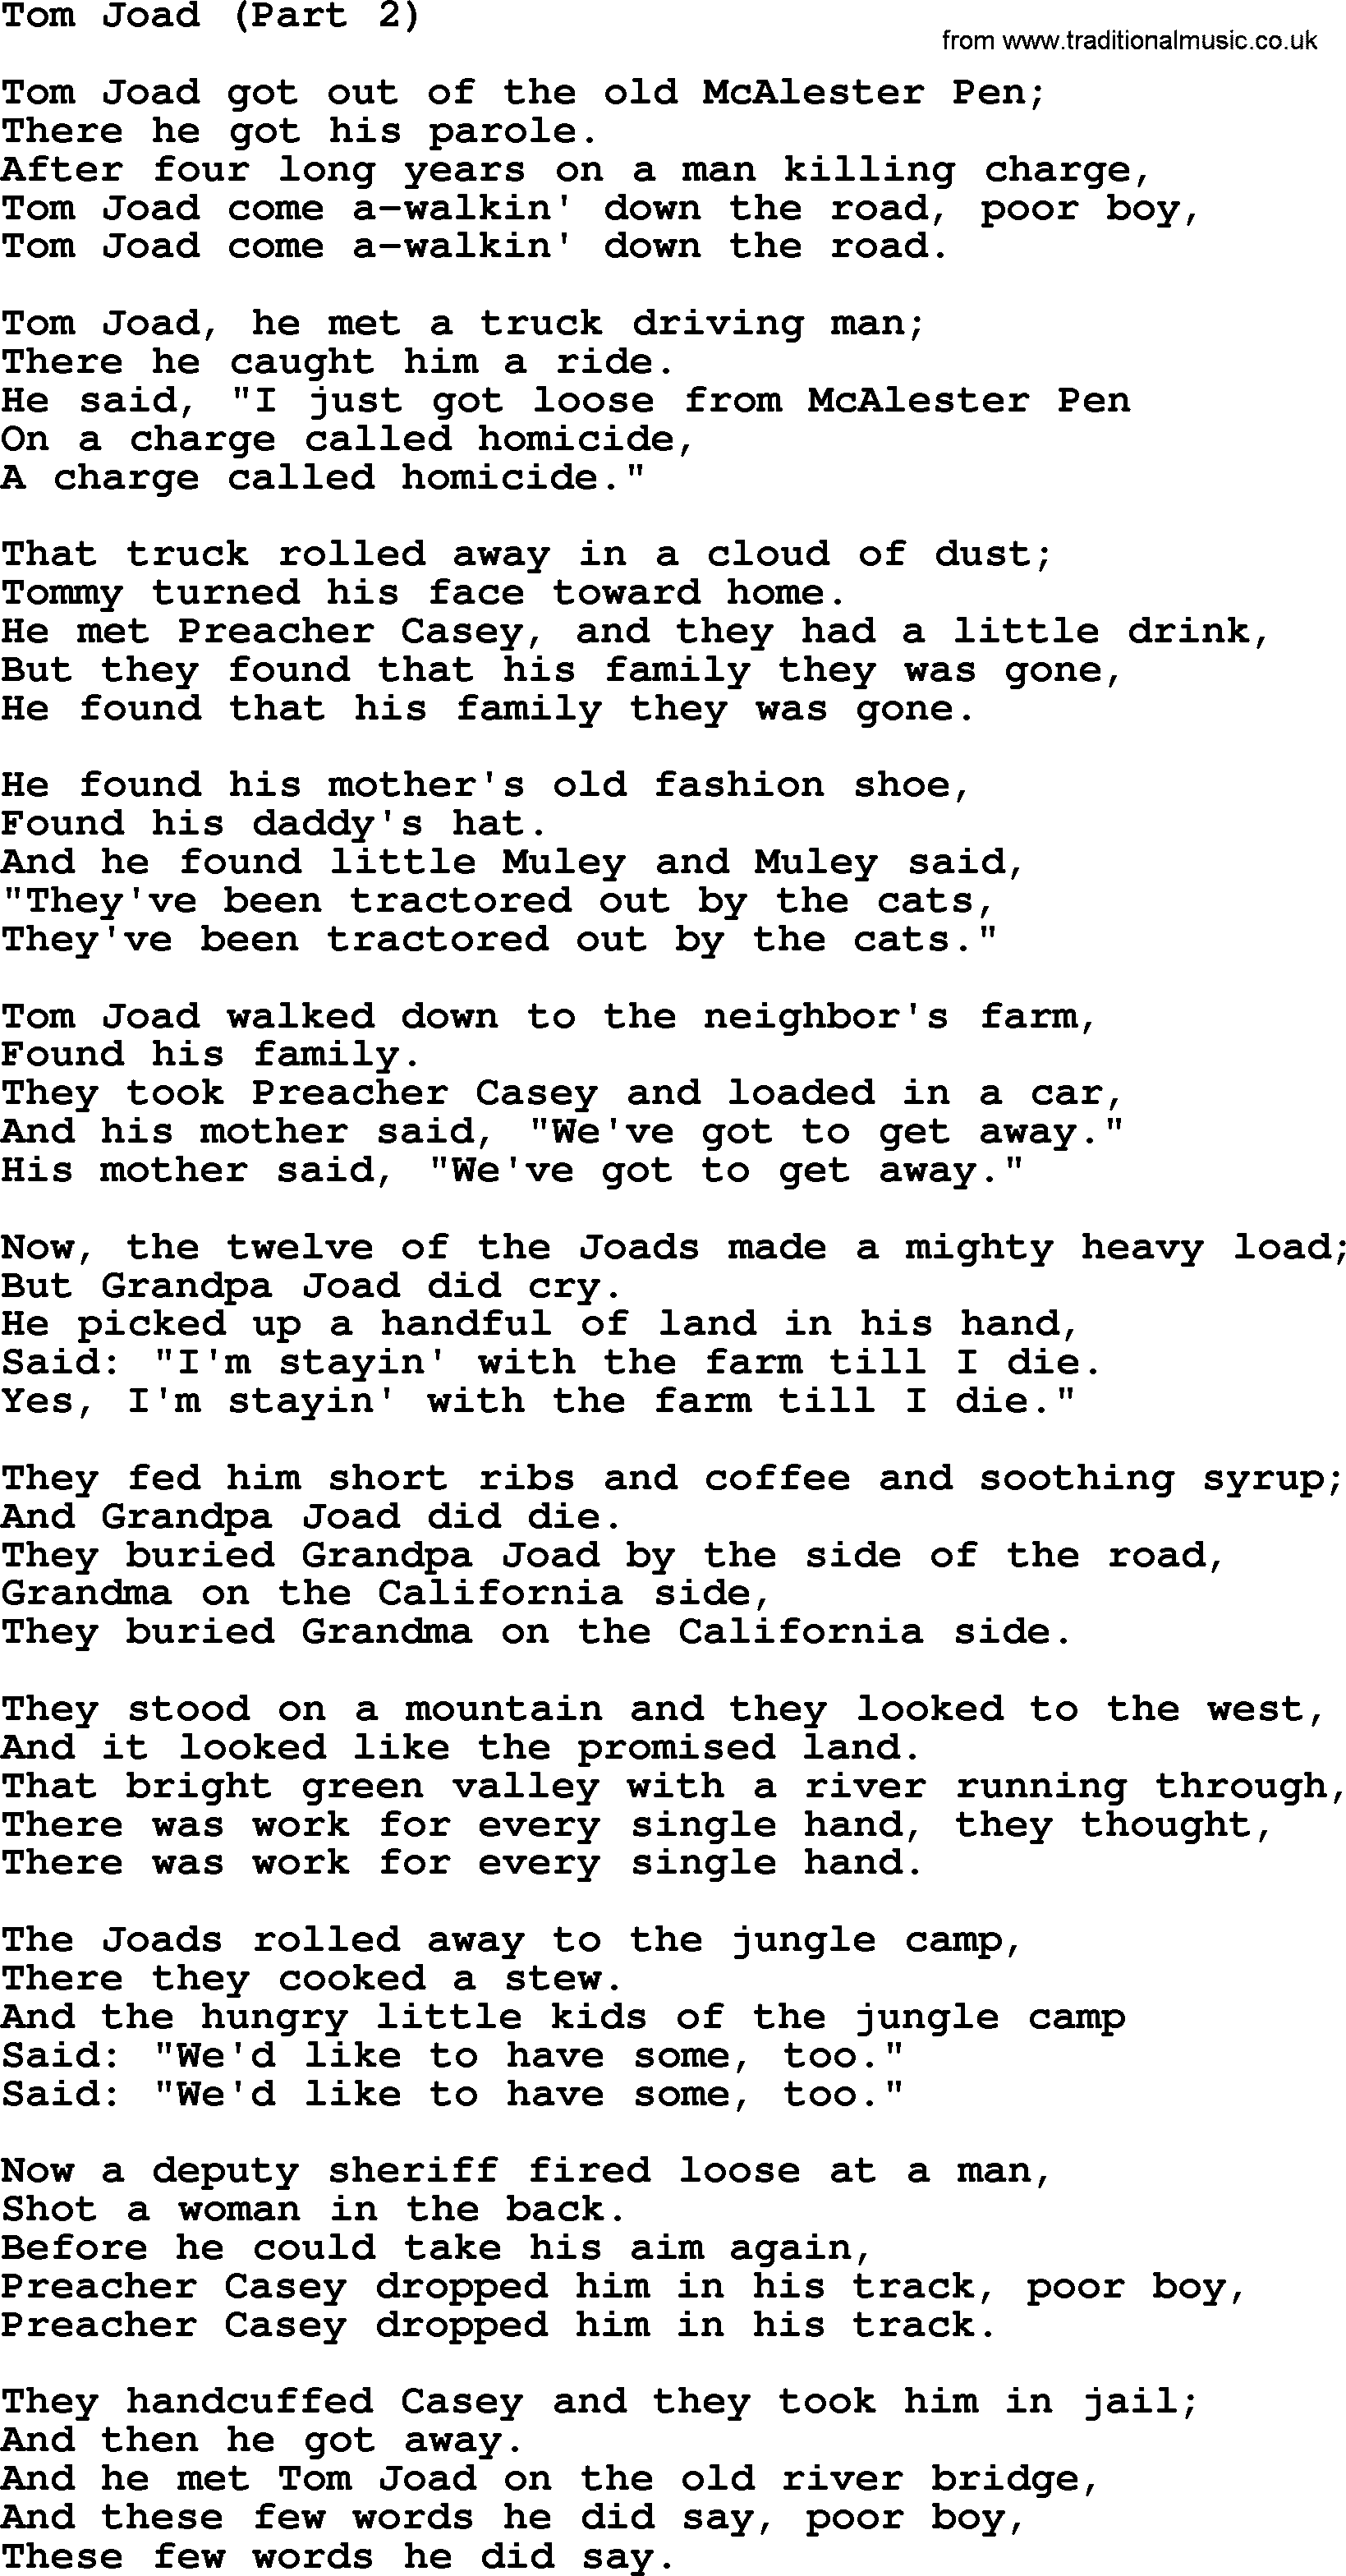 Woody Guthrie song Tom Joad Part 2 lyrics